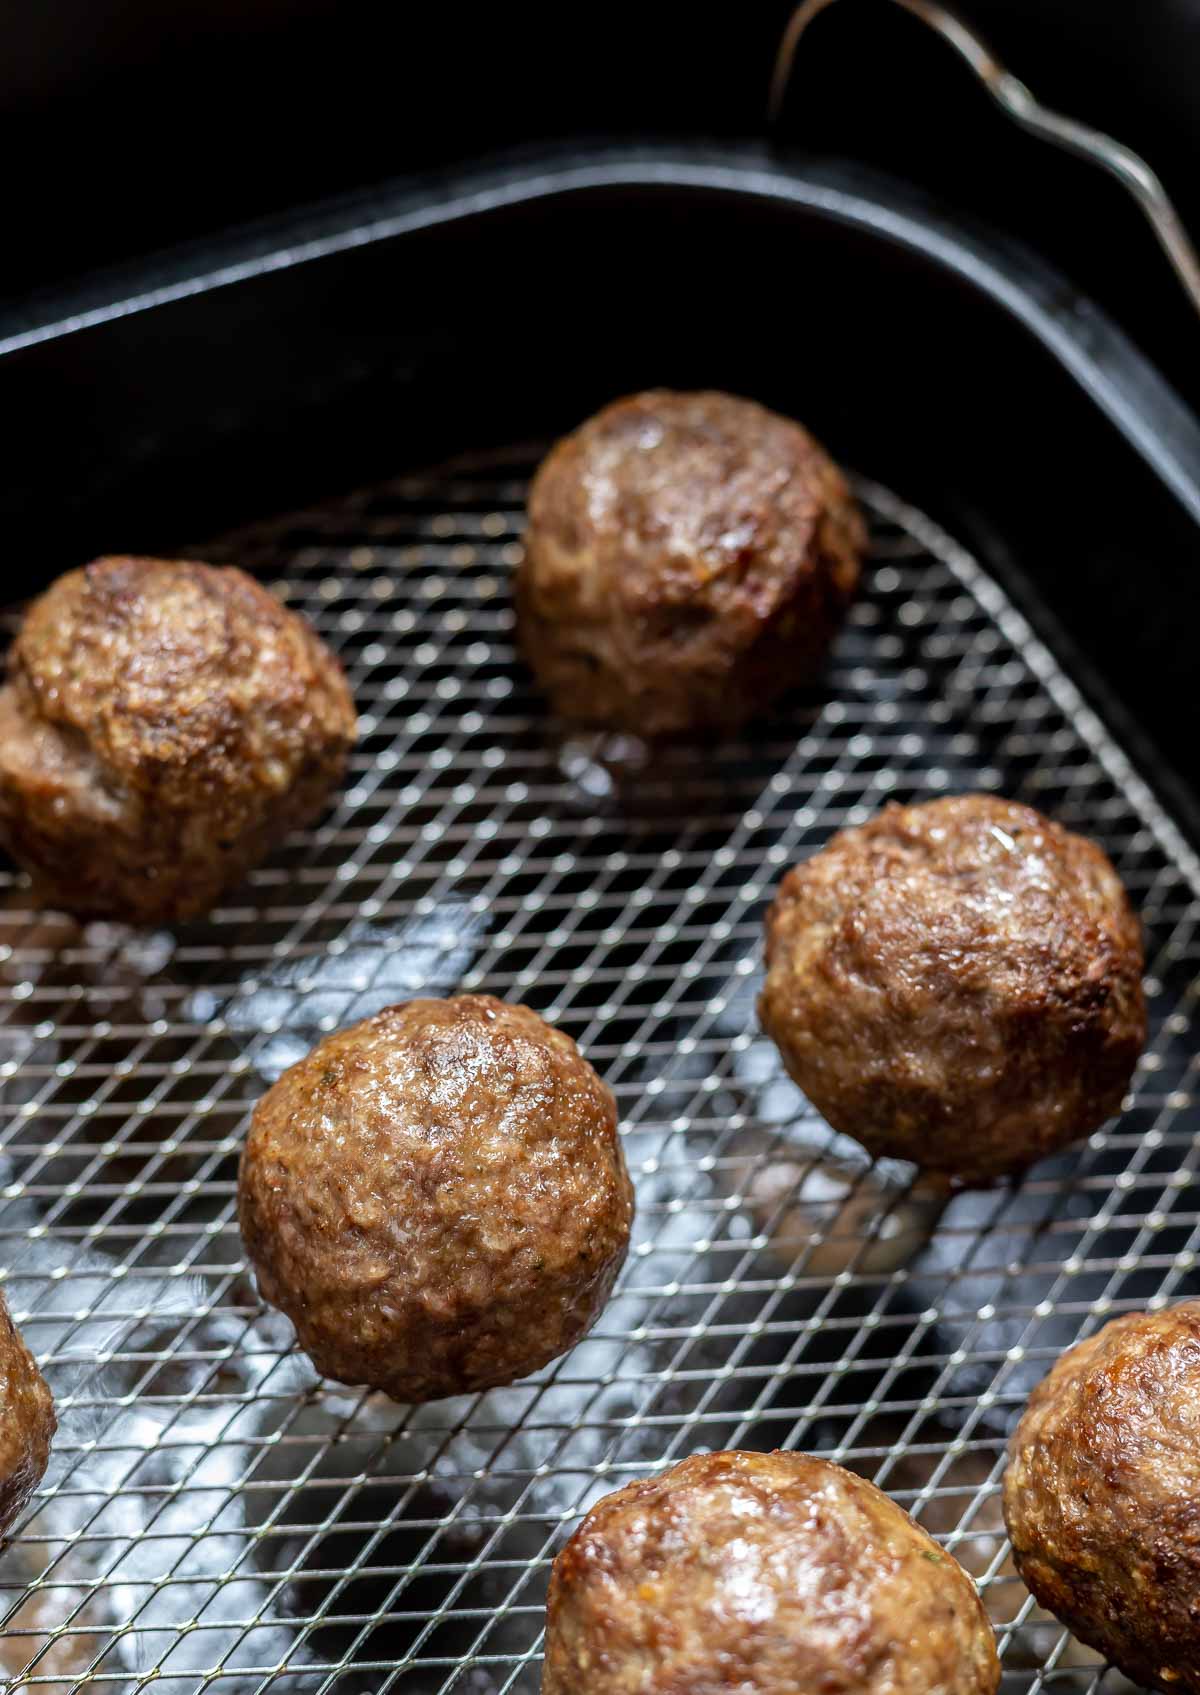 cooked meatballs in basket